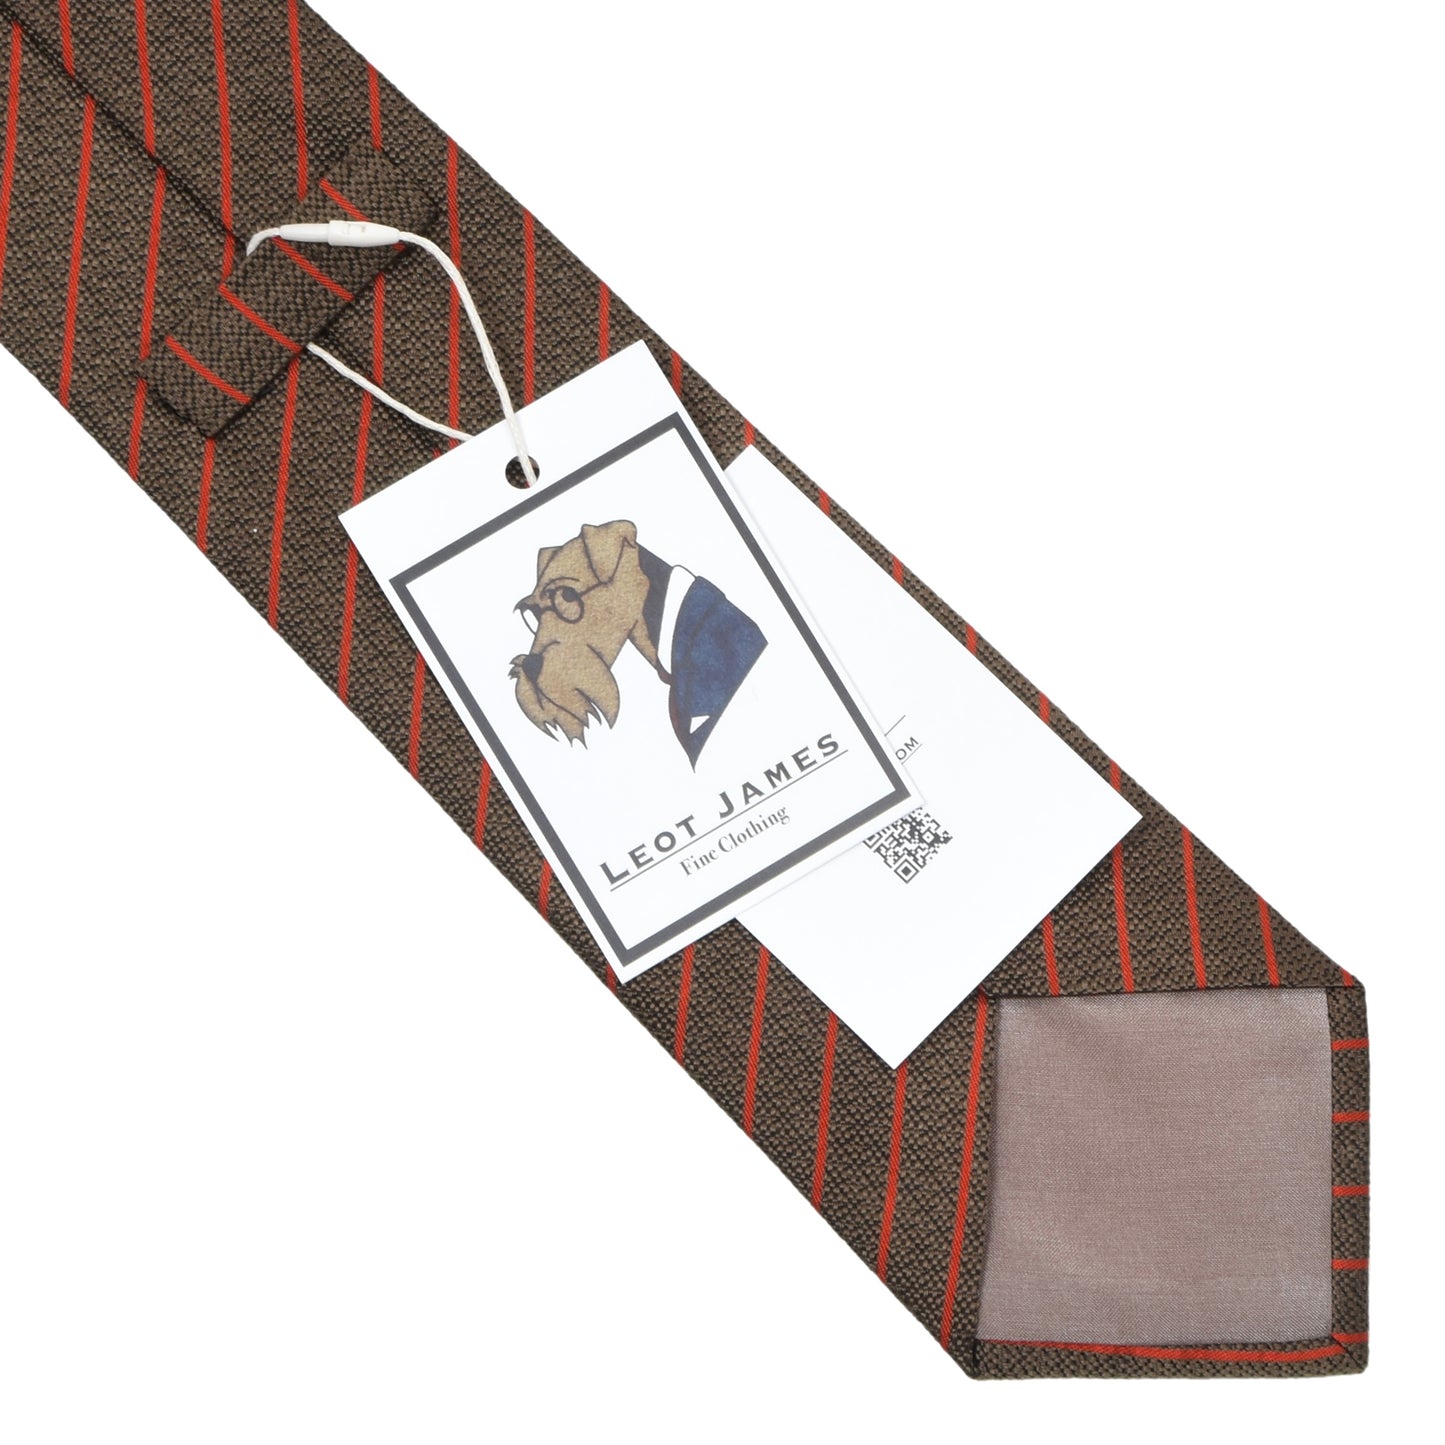 Chester Barrie 100% Silk Tie ca. 140.5cm/8.8cm - Orange Stripes